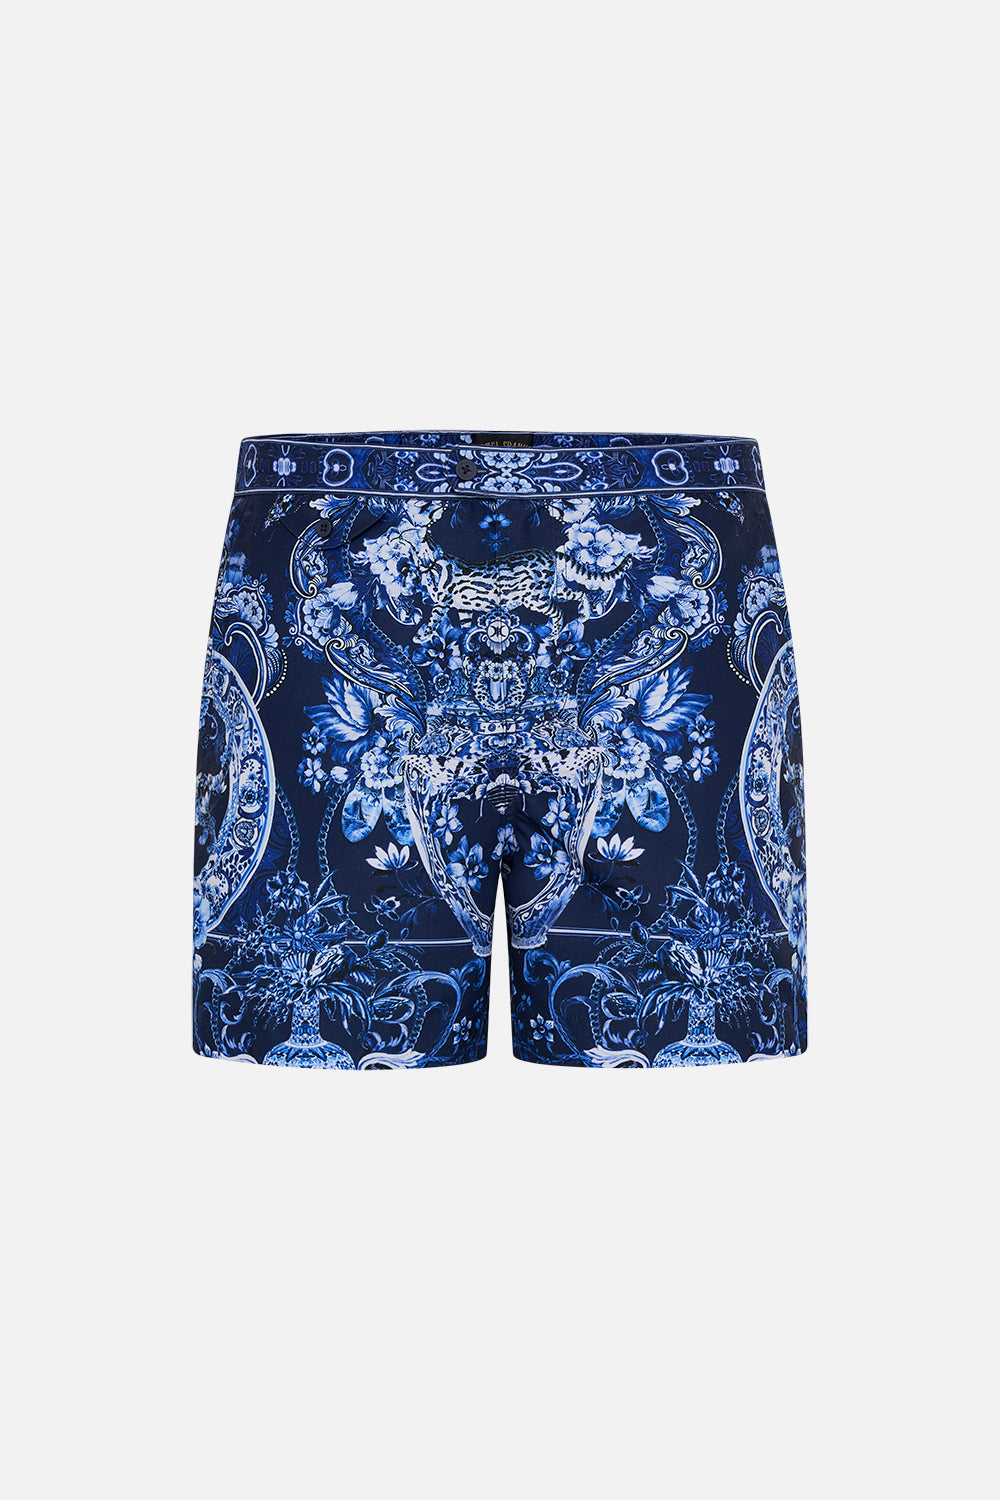 Hotel Franks By CAMILLA mens blue swim shorts in Delft Dynasty print